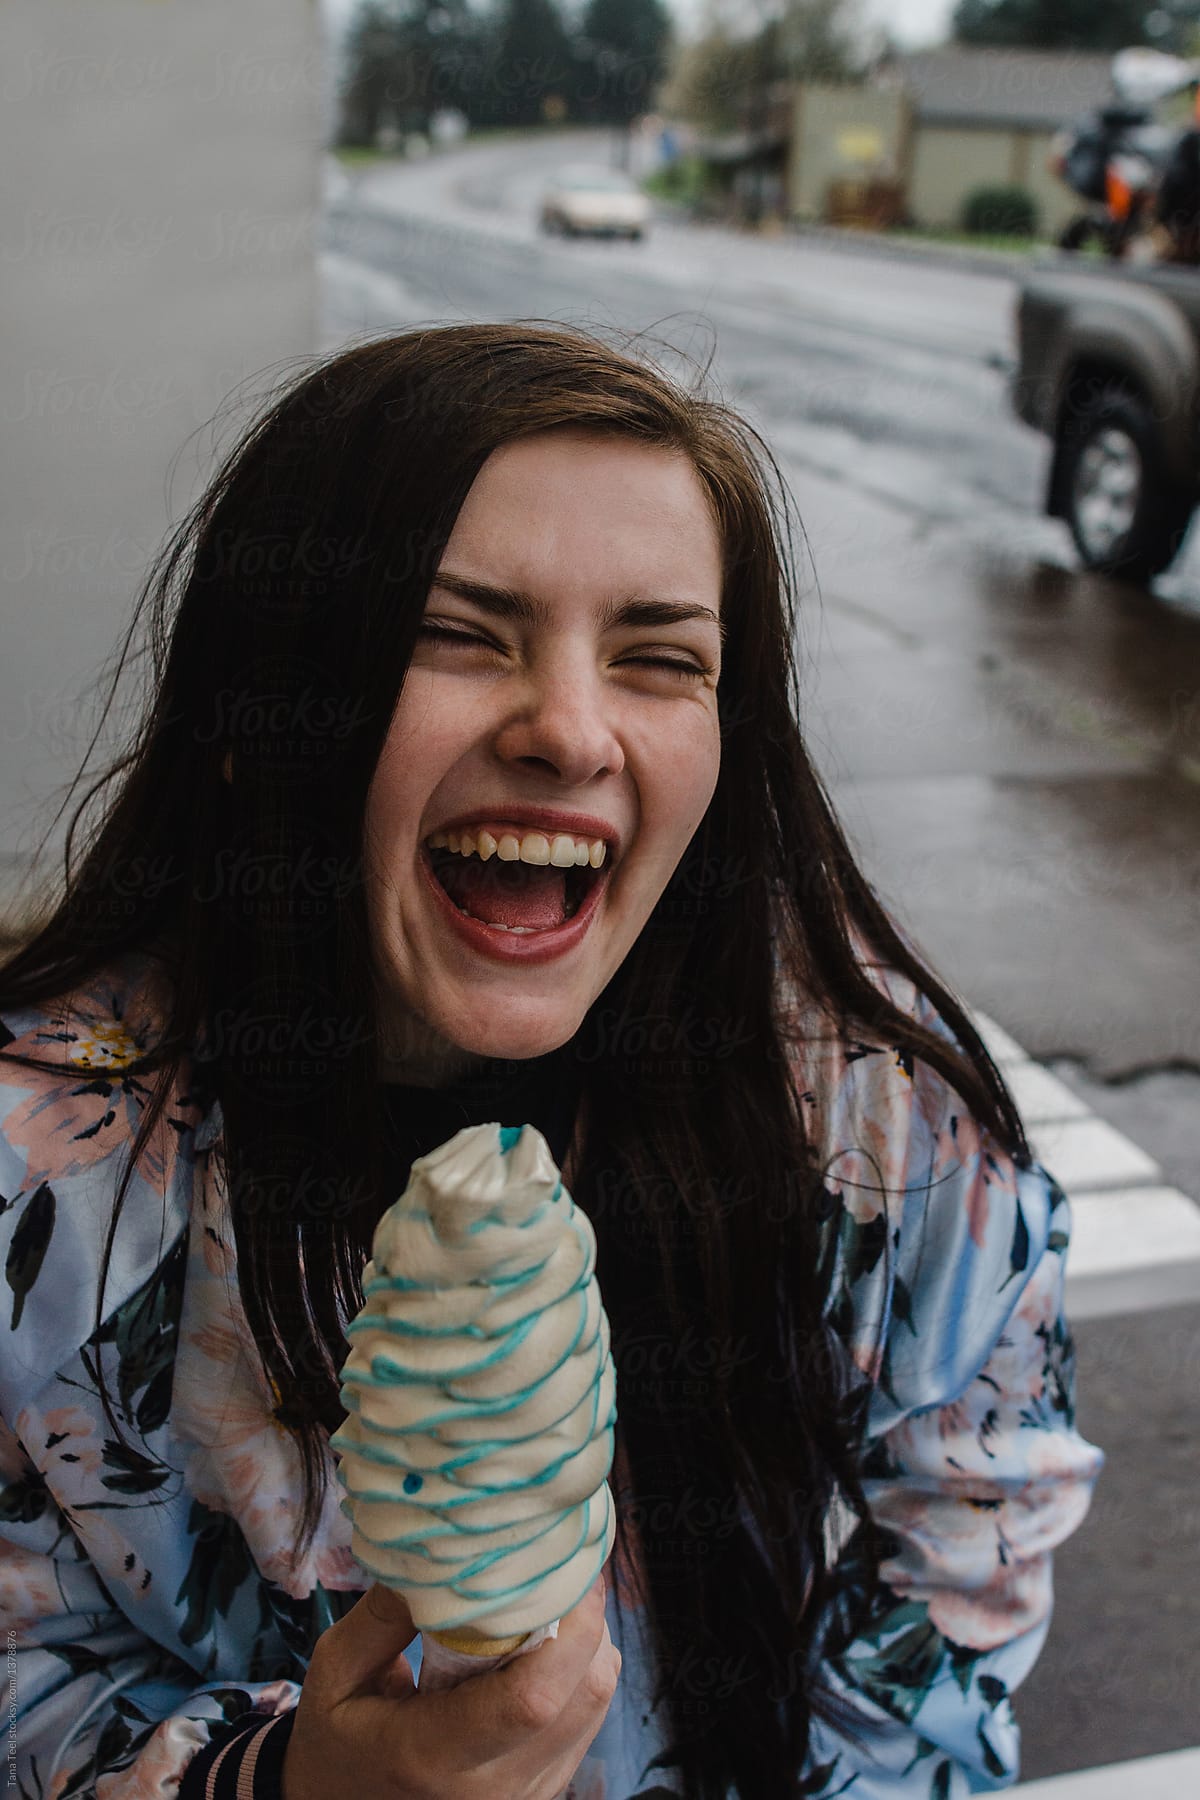 teenager enjoying ice cream cone on rainy day